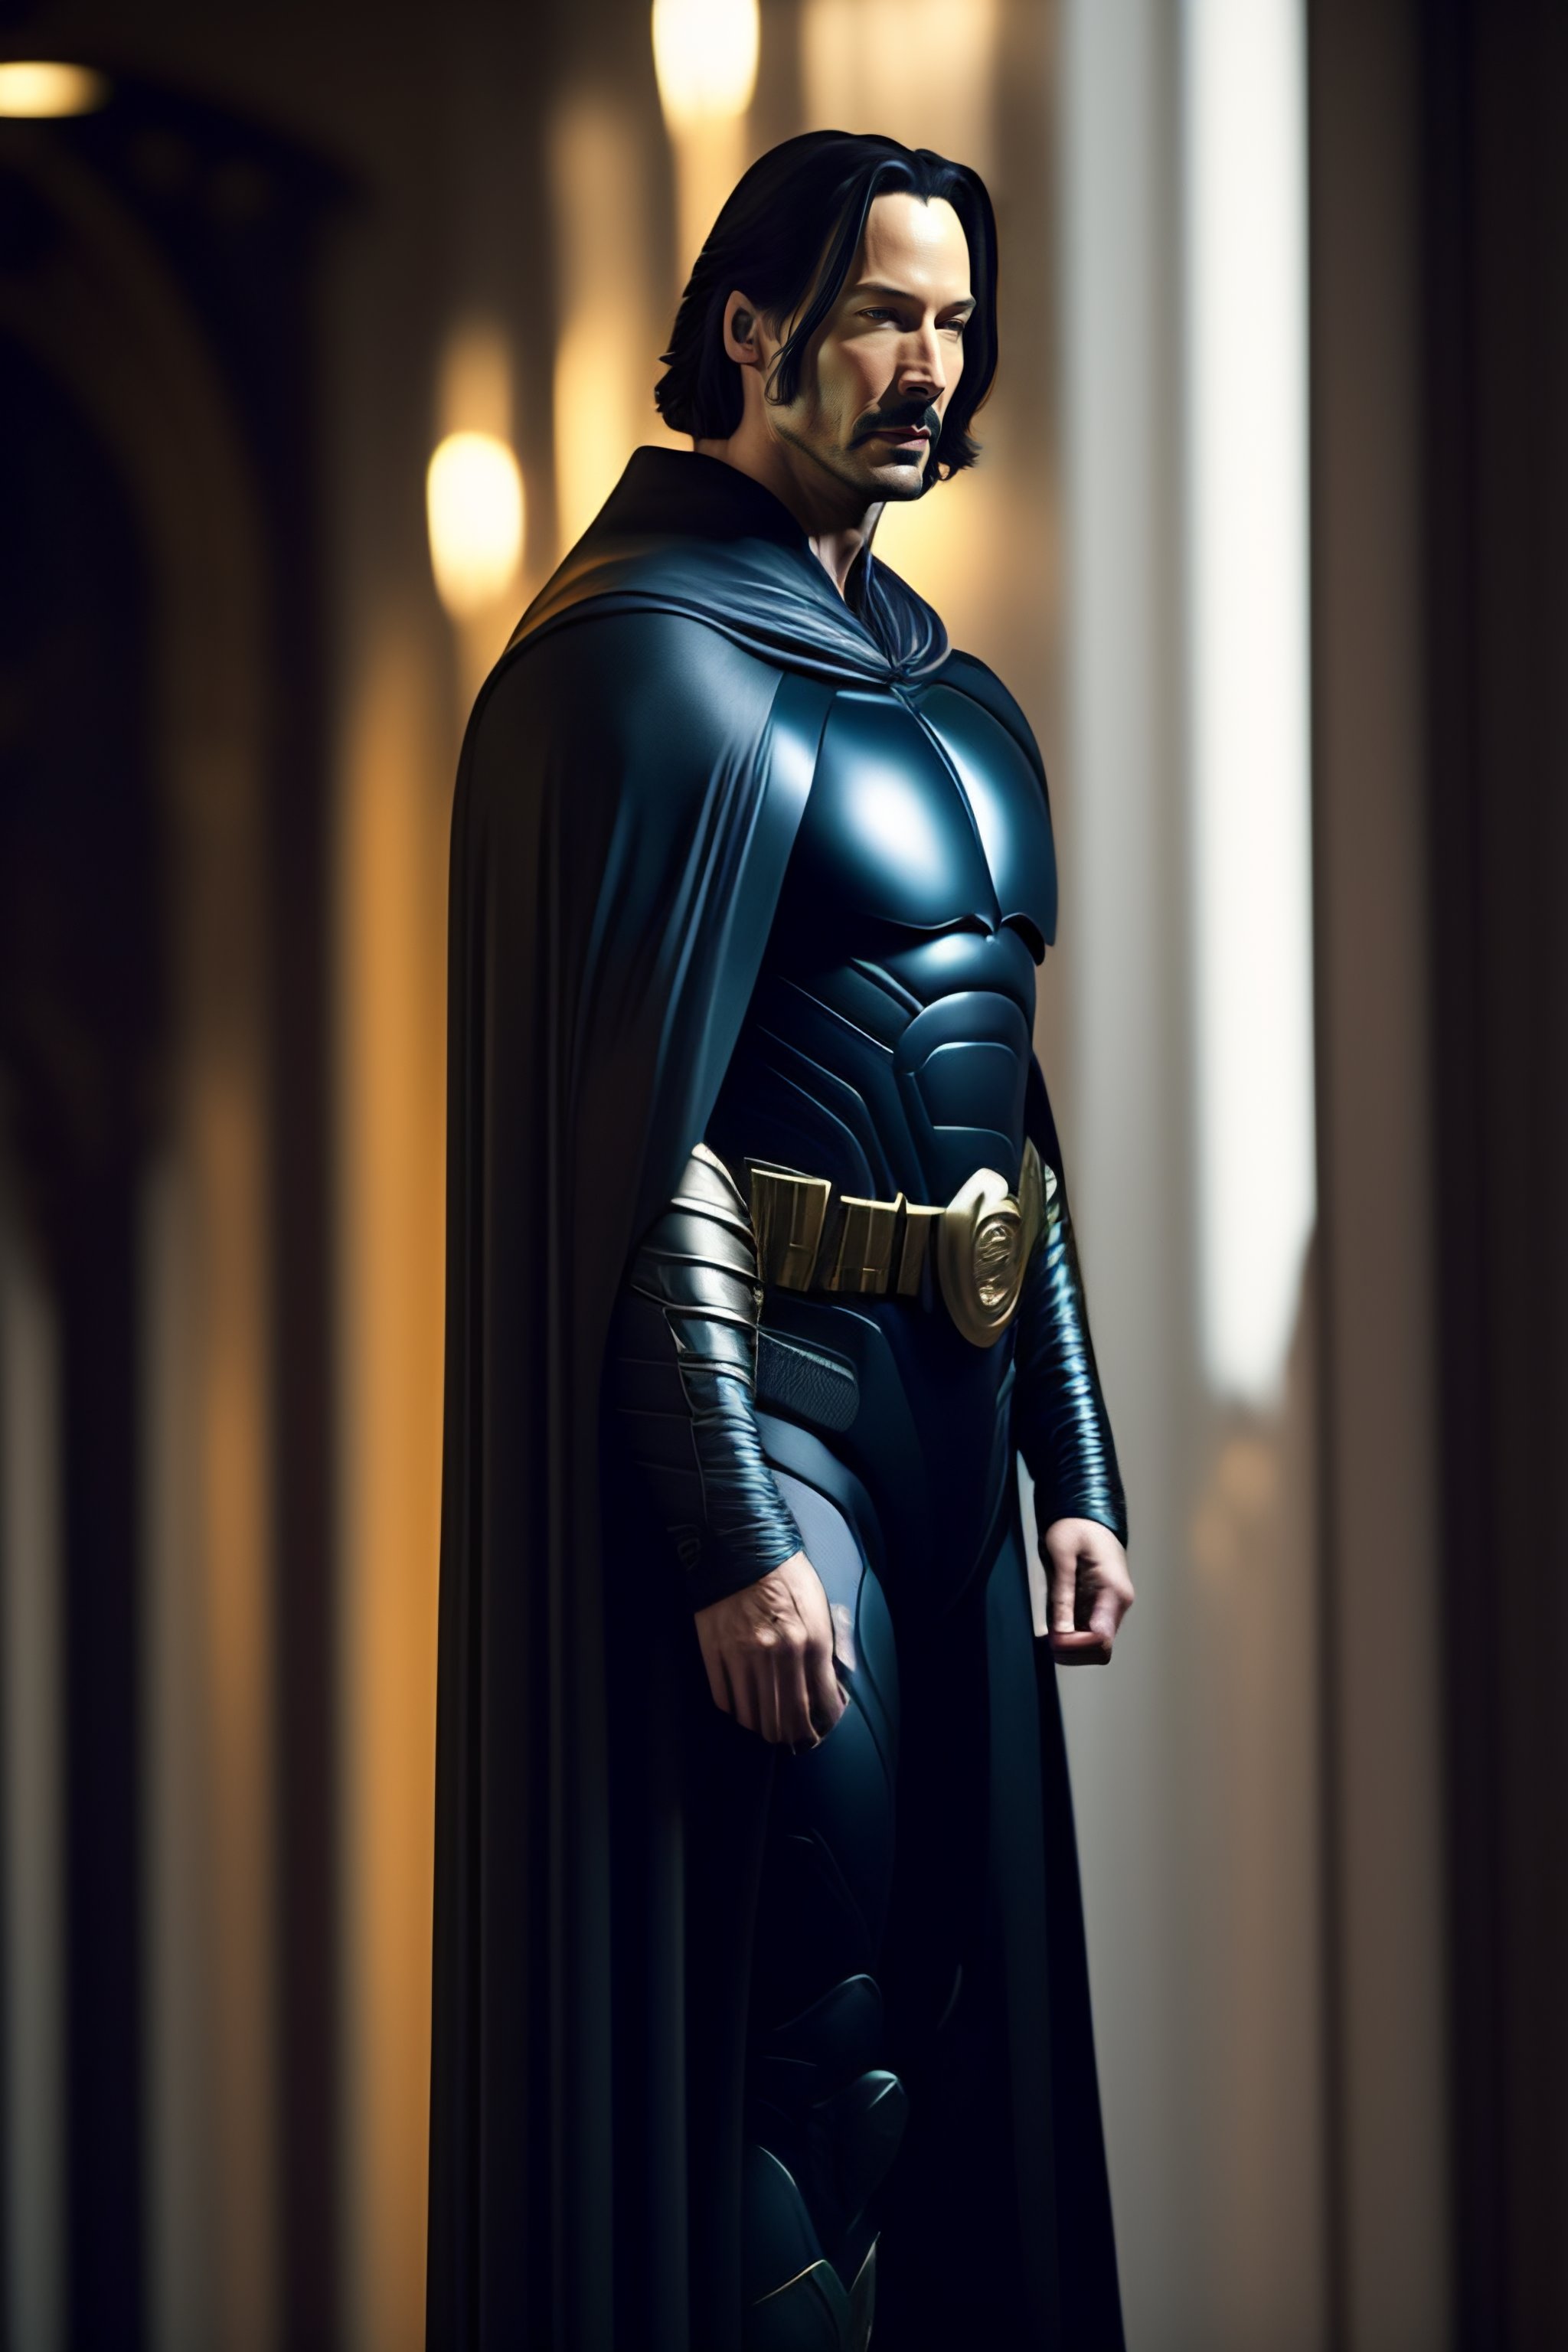 Lexica - Keanu Reeves as bruce wayne with batsuit in batman movie, full body